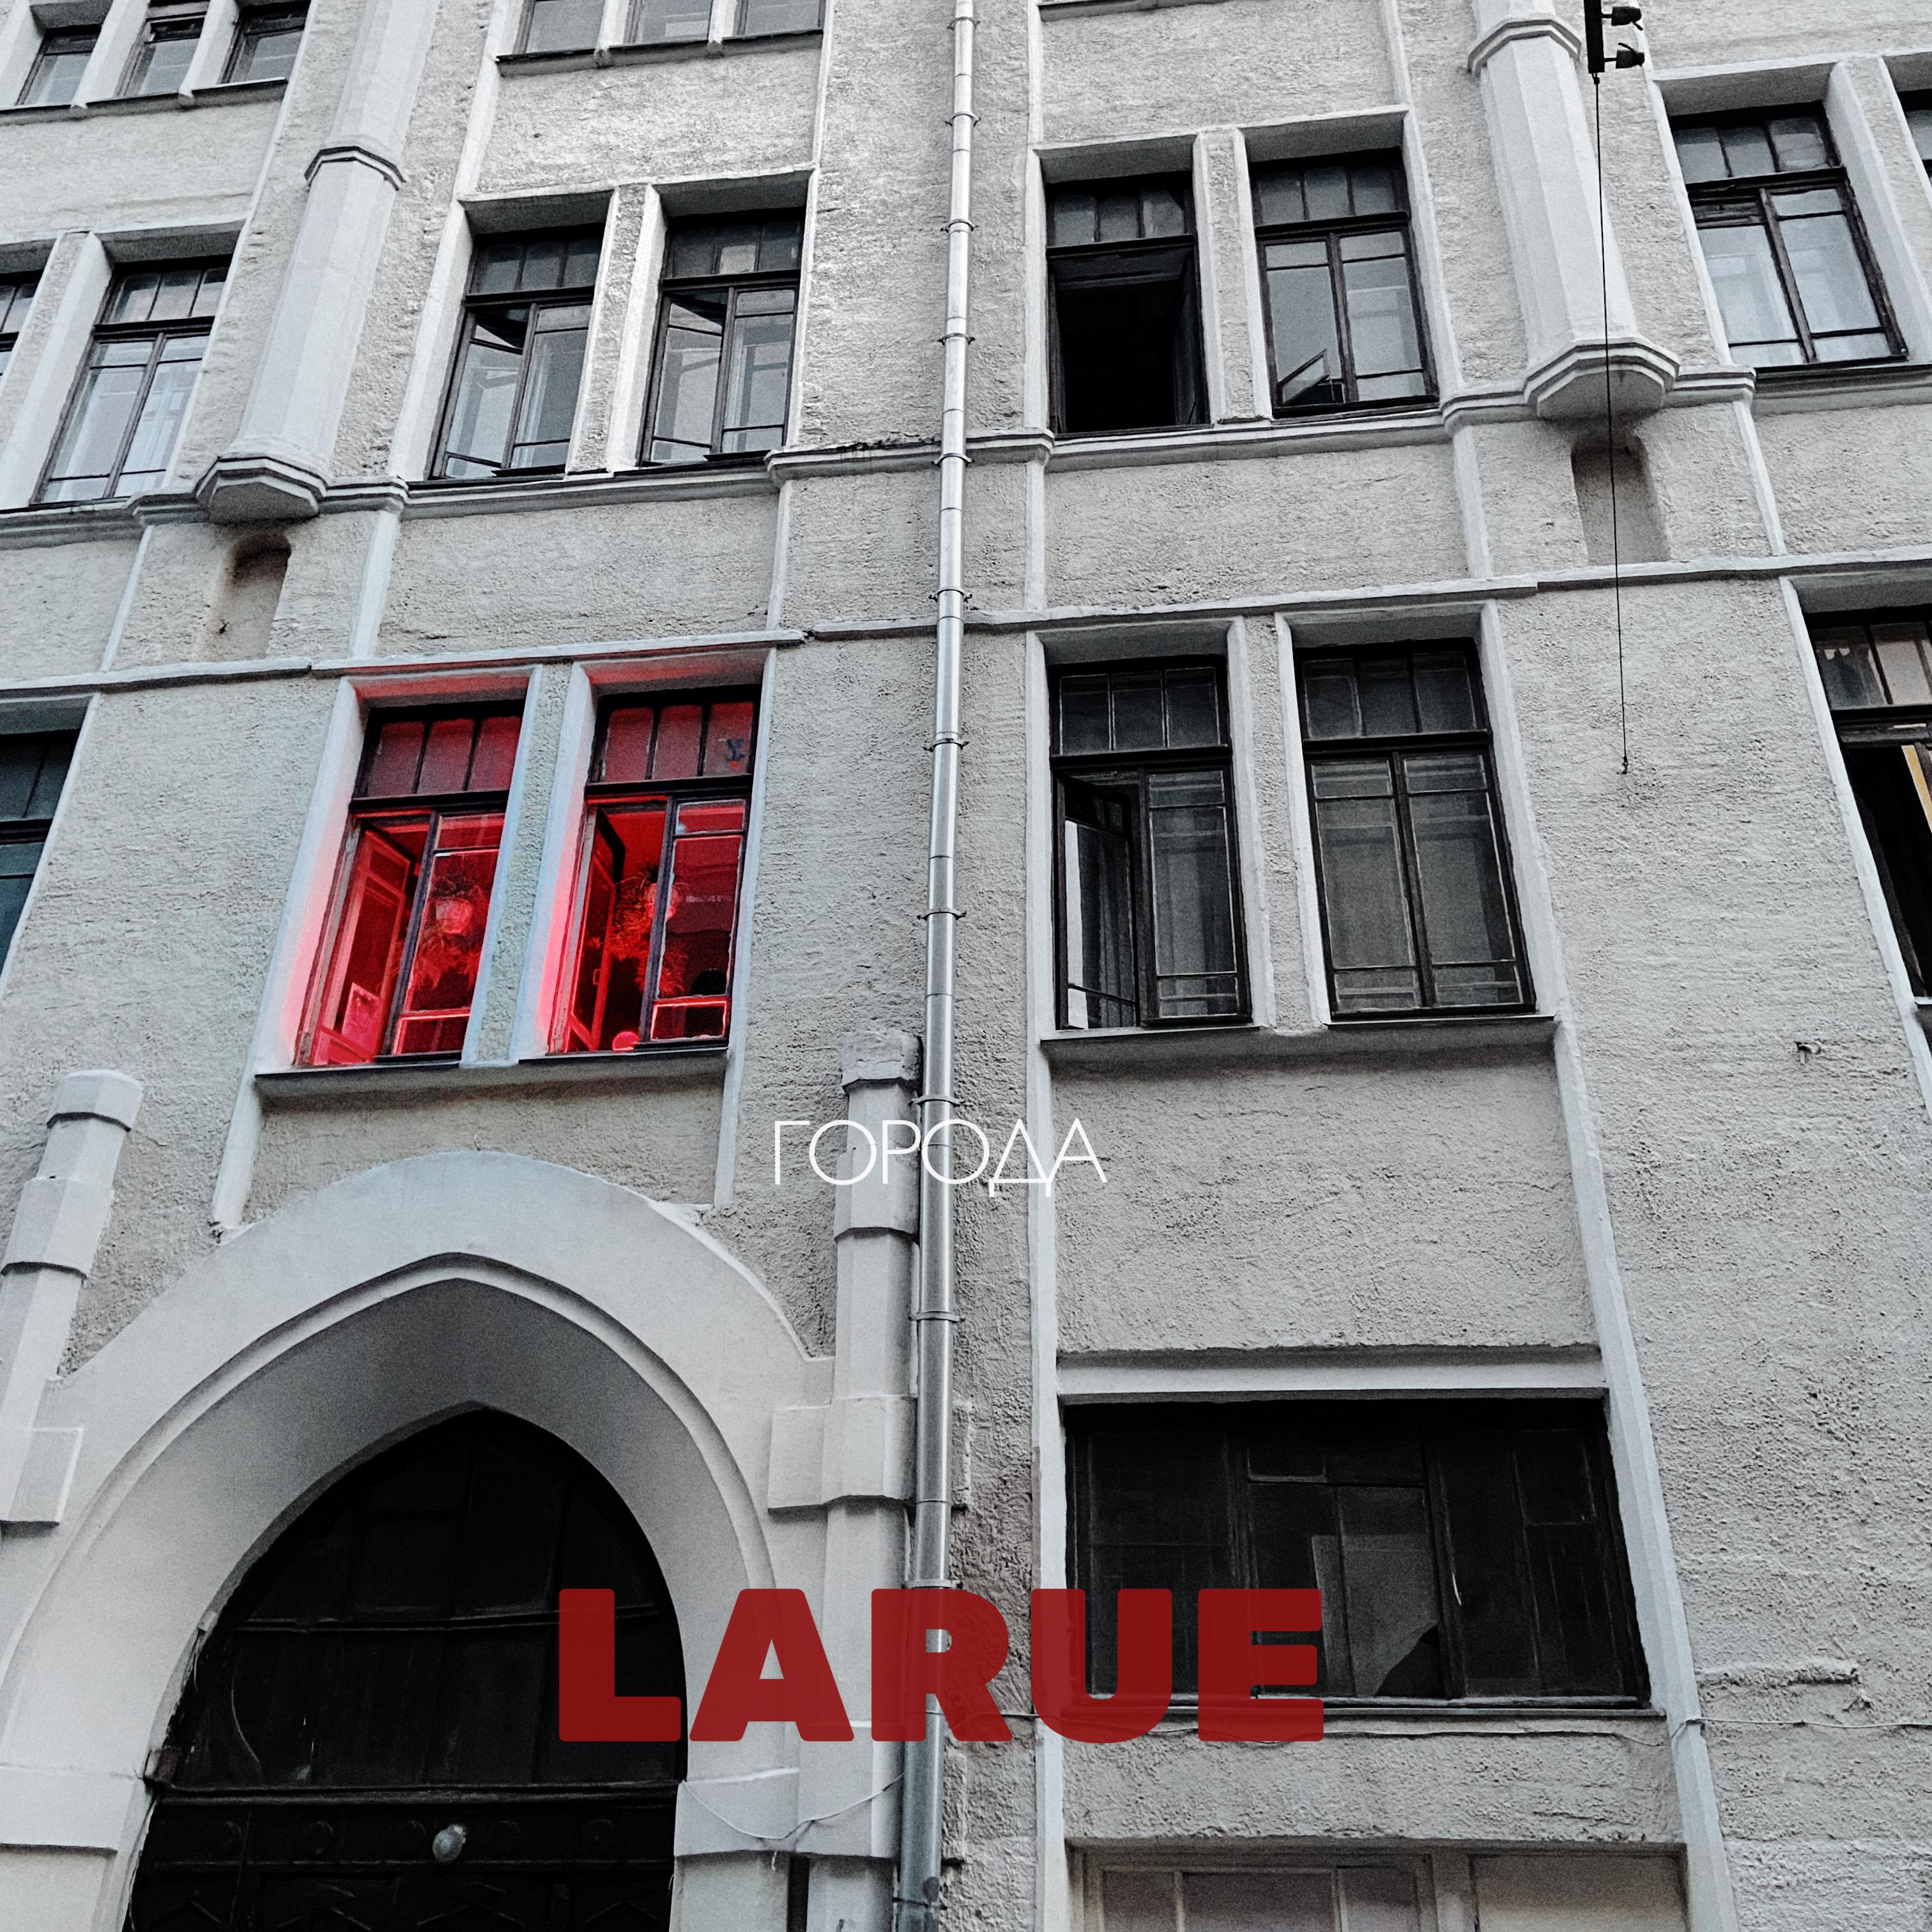 LaRue - Города